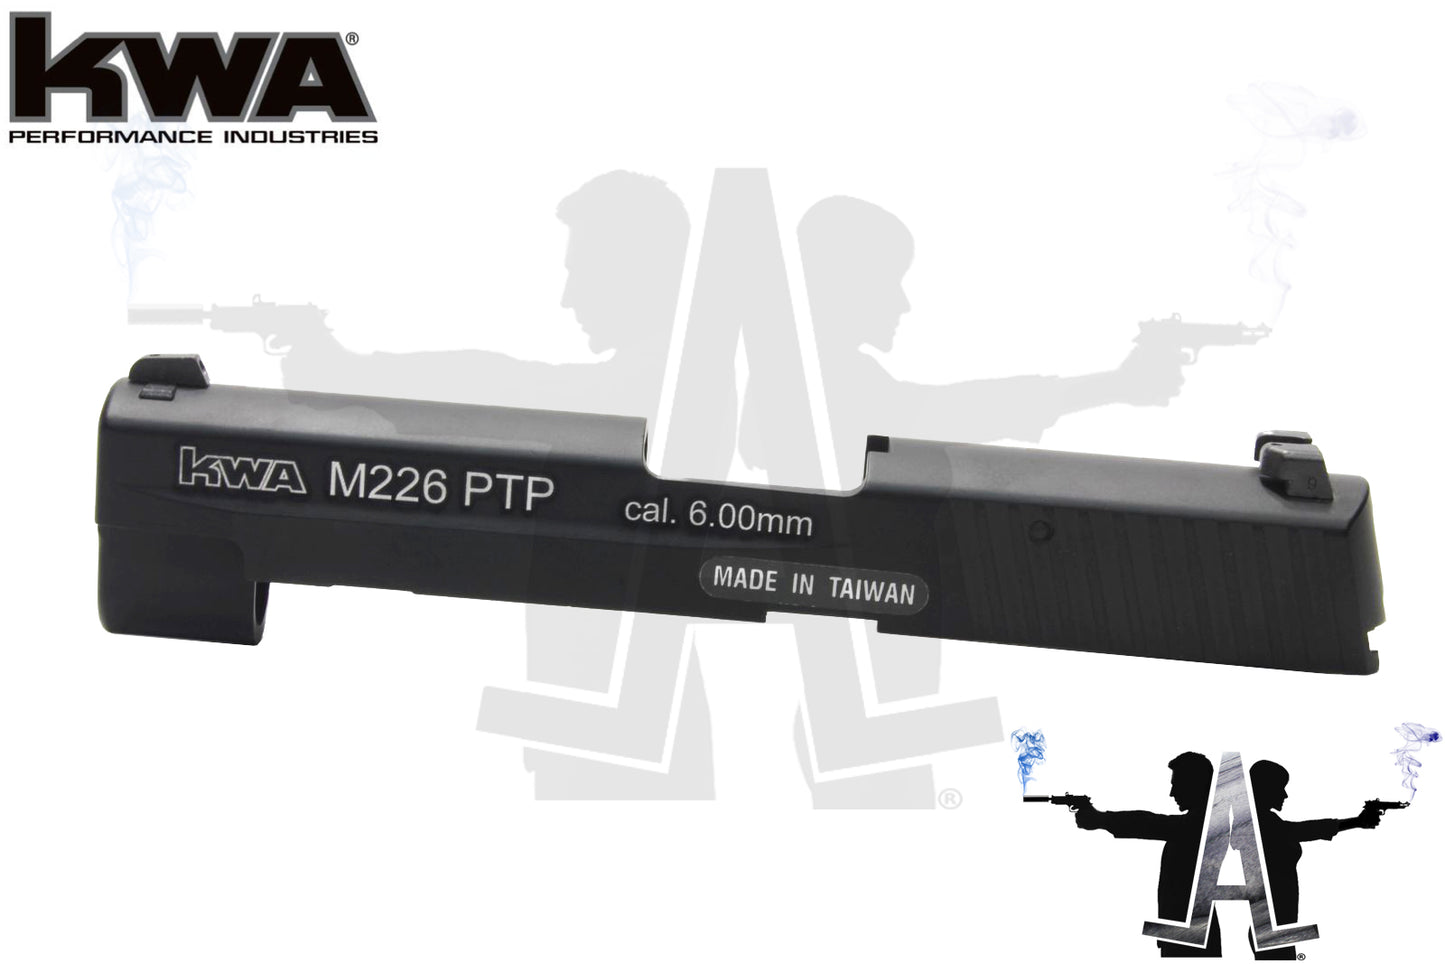 KWA P226 PTP Slide Replacement Unit